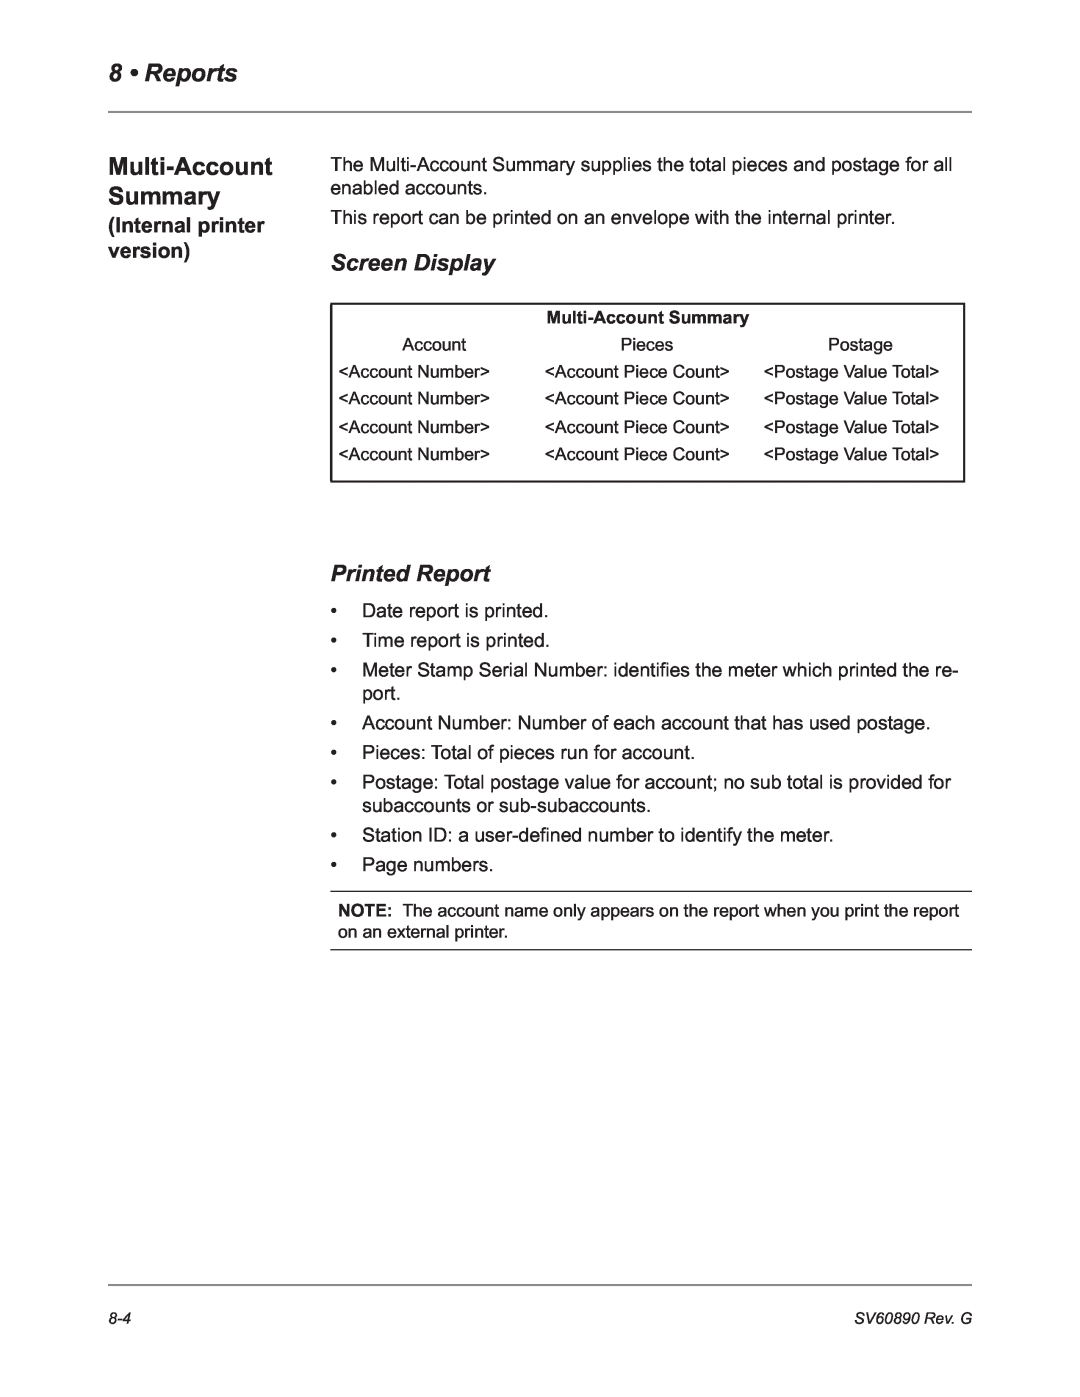 Pitney Bowes DM550, DM500 manual Multi-Account Summary, Screen Display, Printed Report, Internal printer version, Reports 